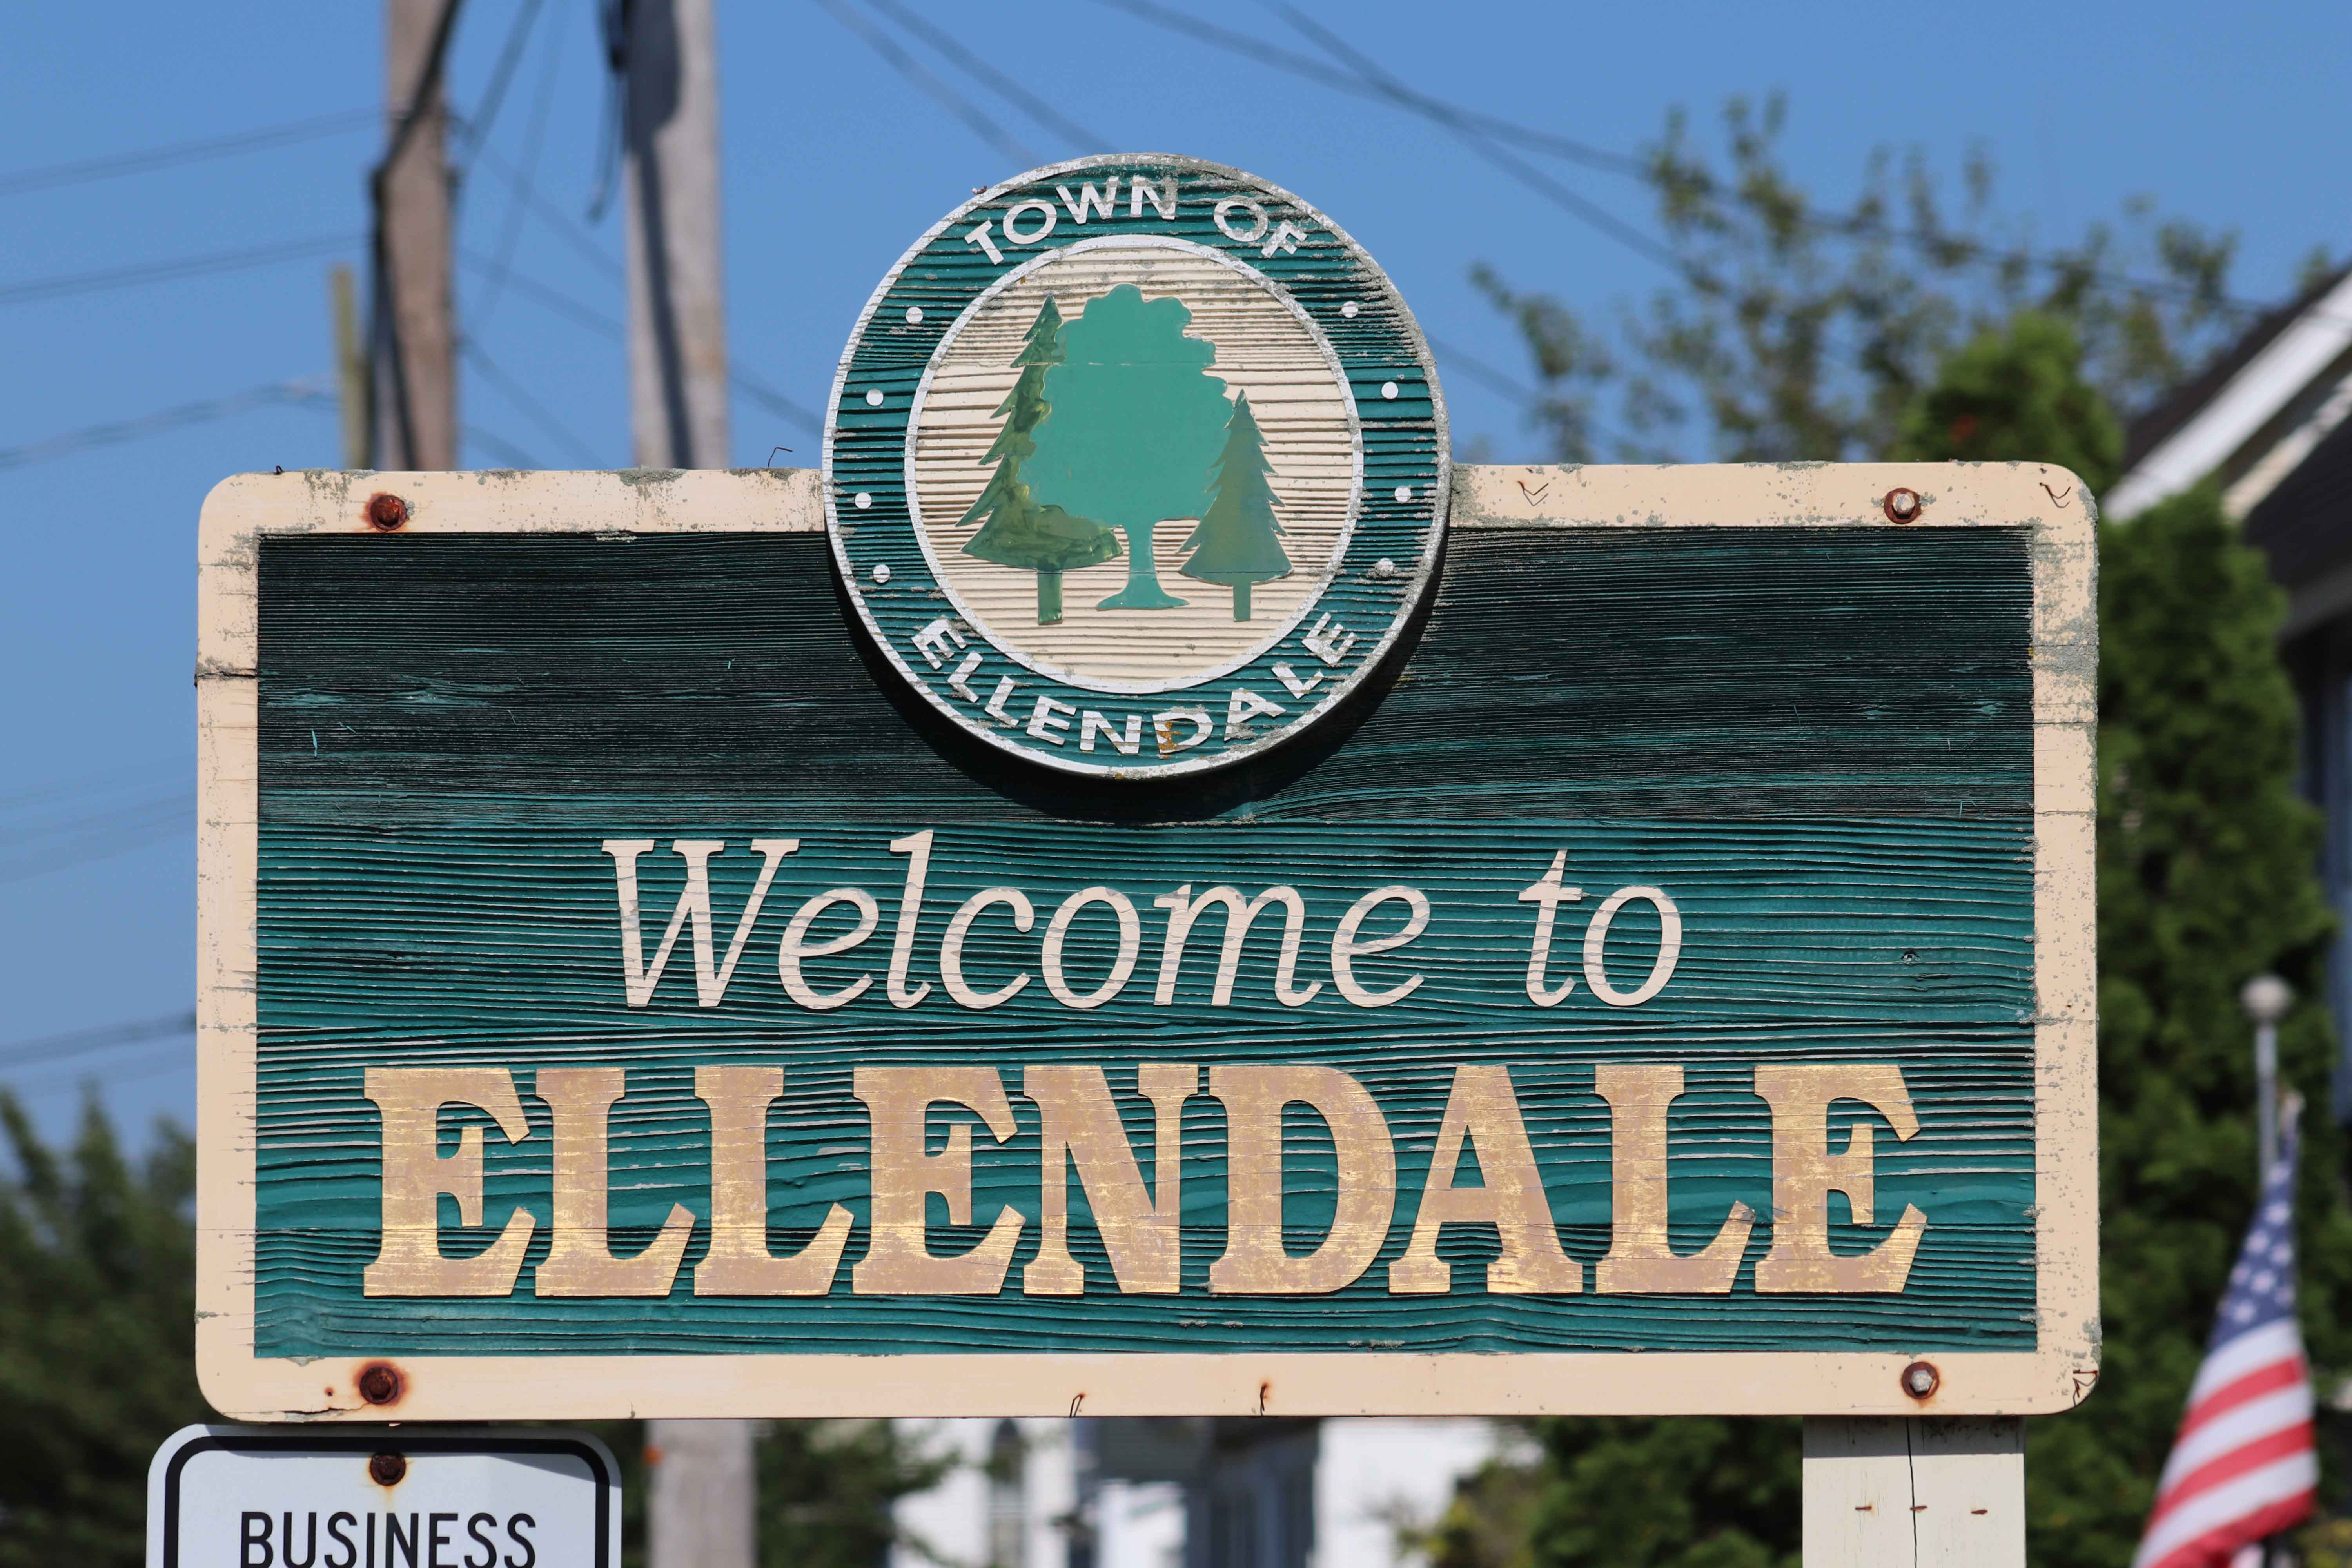 Ellendale Delaware